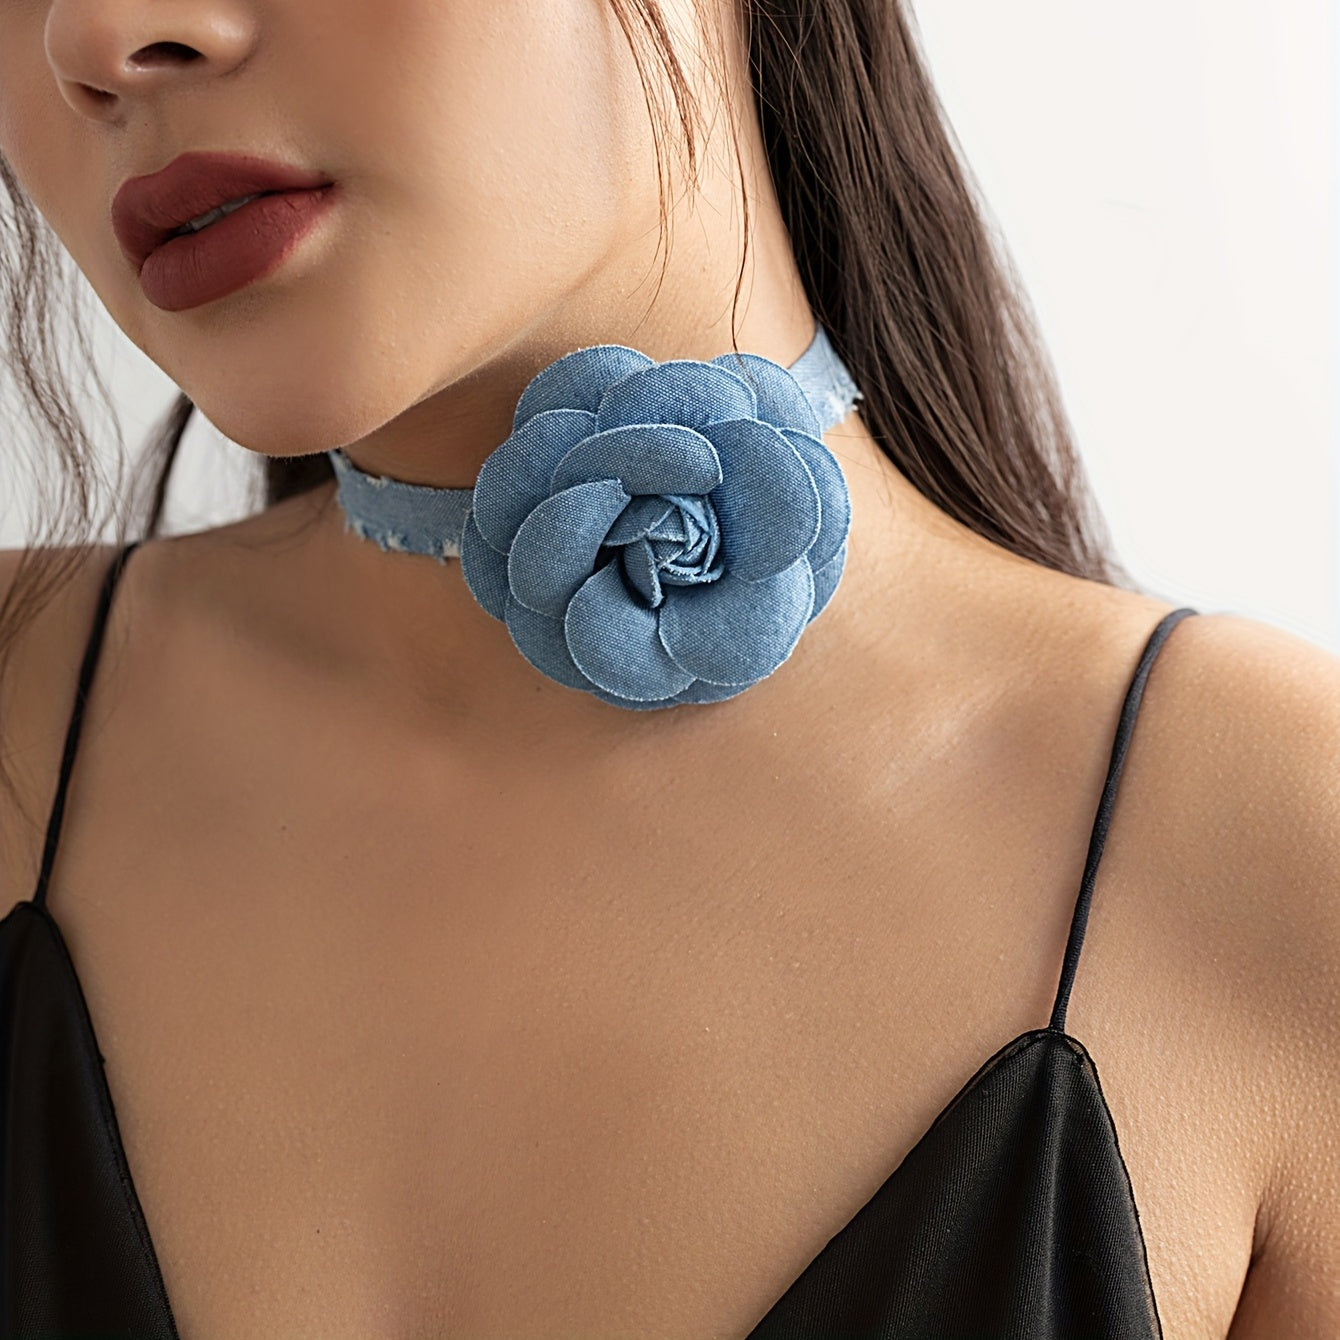 Elegant French Blue Phantom Flower Necklace & Romantic Bracelet Wristband